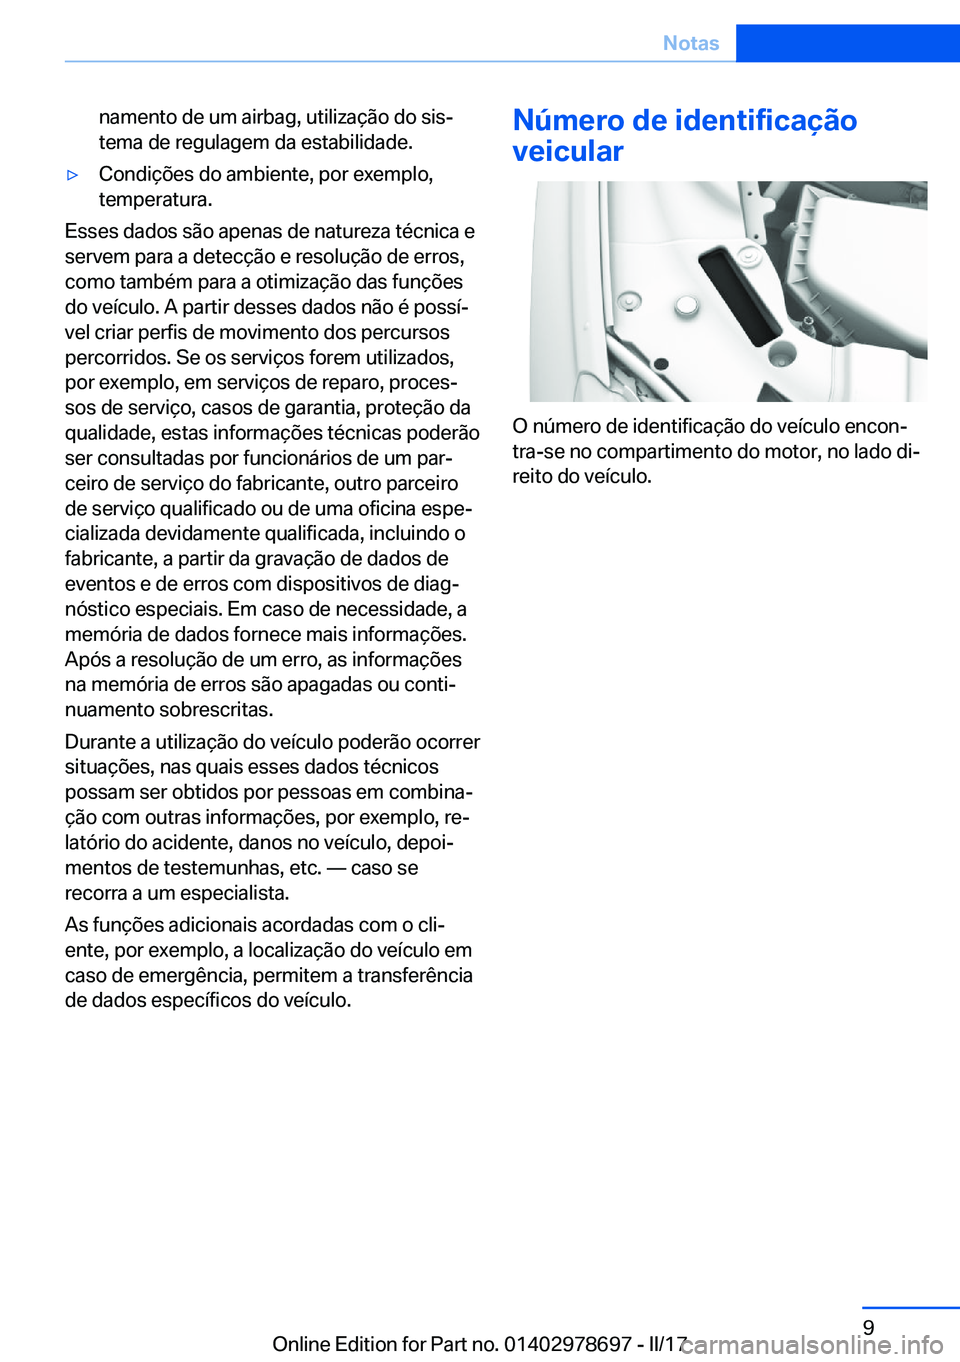 BMW 5 SERIES 2017  Manual do condutor (in Portuguese) �n�a�m�e�n�t�o� �d�e� �u�m� �a�i�r�b�a�g�,� �u�t�i�l�i�z�a�ç�ã�o� �d�o� �s�i�sª�t�e�m�a� �d�e� �r�e�g�u�l�a�g�e�m� �d�a� �e�s�t�a�b�i�l�i�d�a�d�e�.'y�C�o�n�d�i�ç�õ�e�s� �d�o� �a�m�b�i�e�n�t�